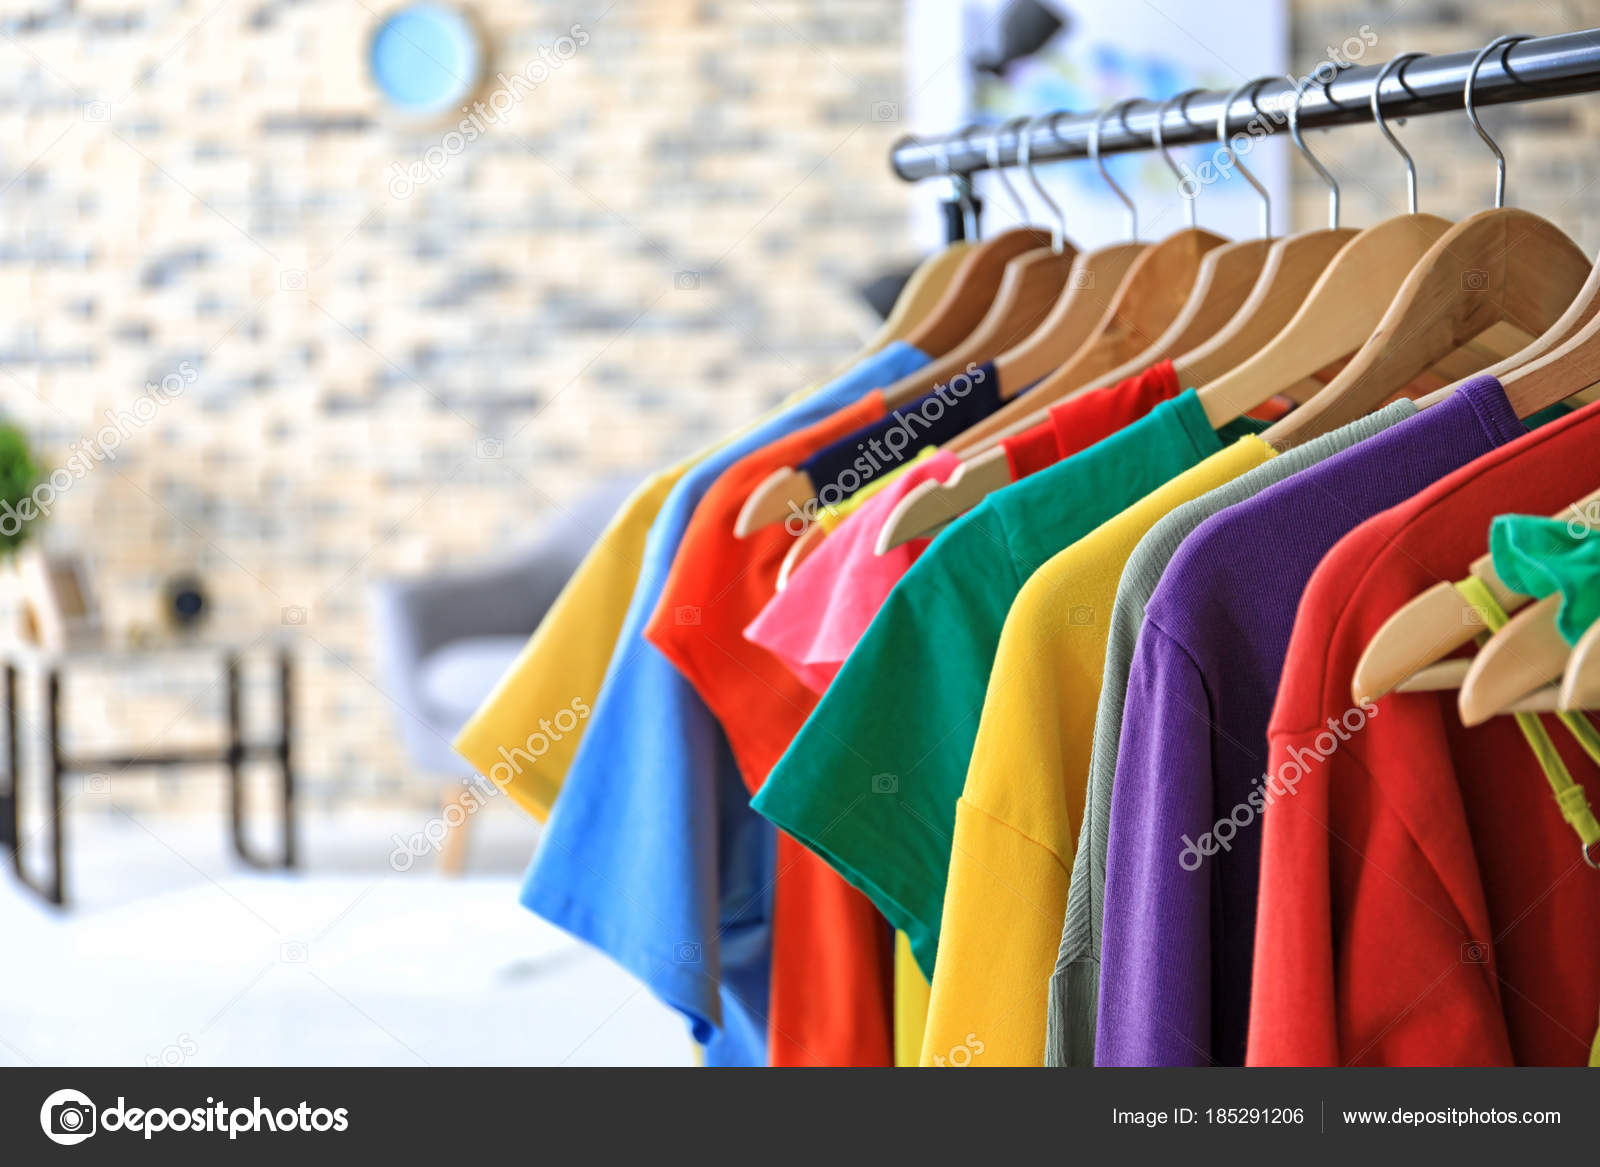 https://st3.depositphotos.com/1177973/18529/i/1600/depositphotos_185291206-stock-photo-rack-rainbow-clothes-hangers-indoors.jpg